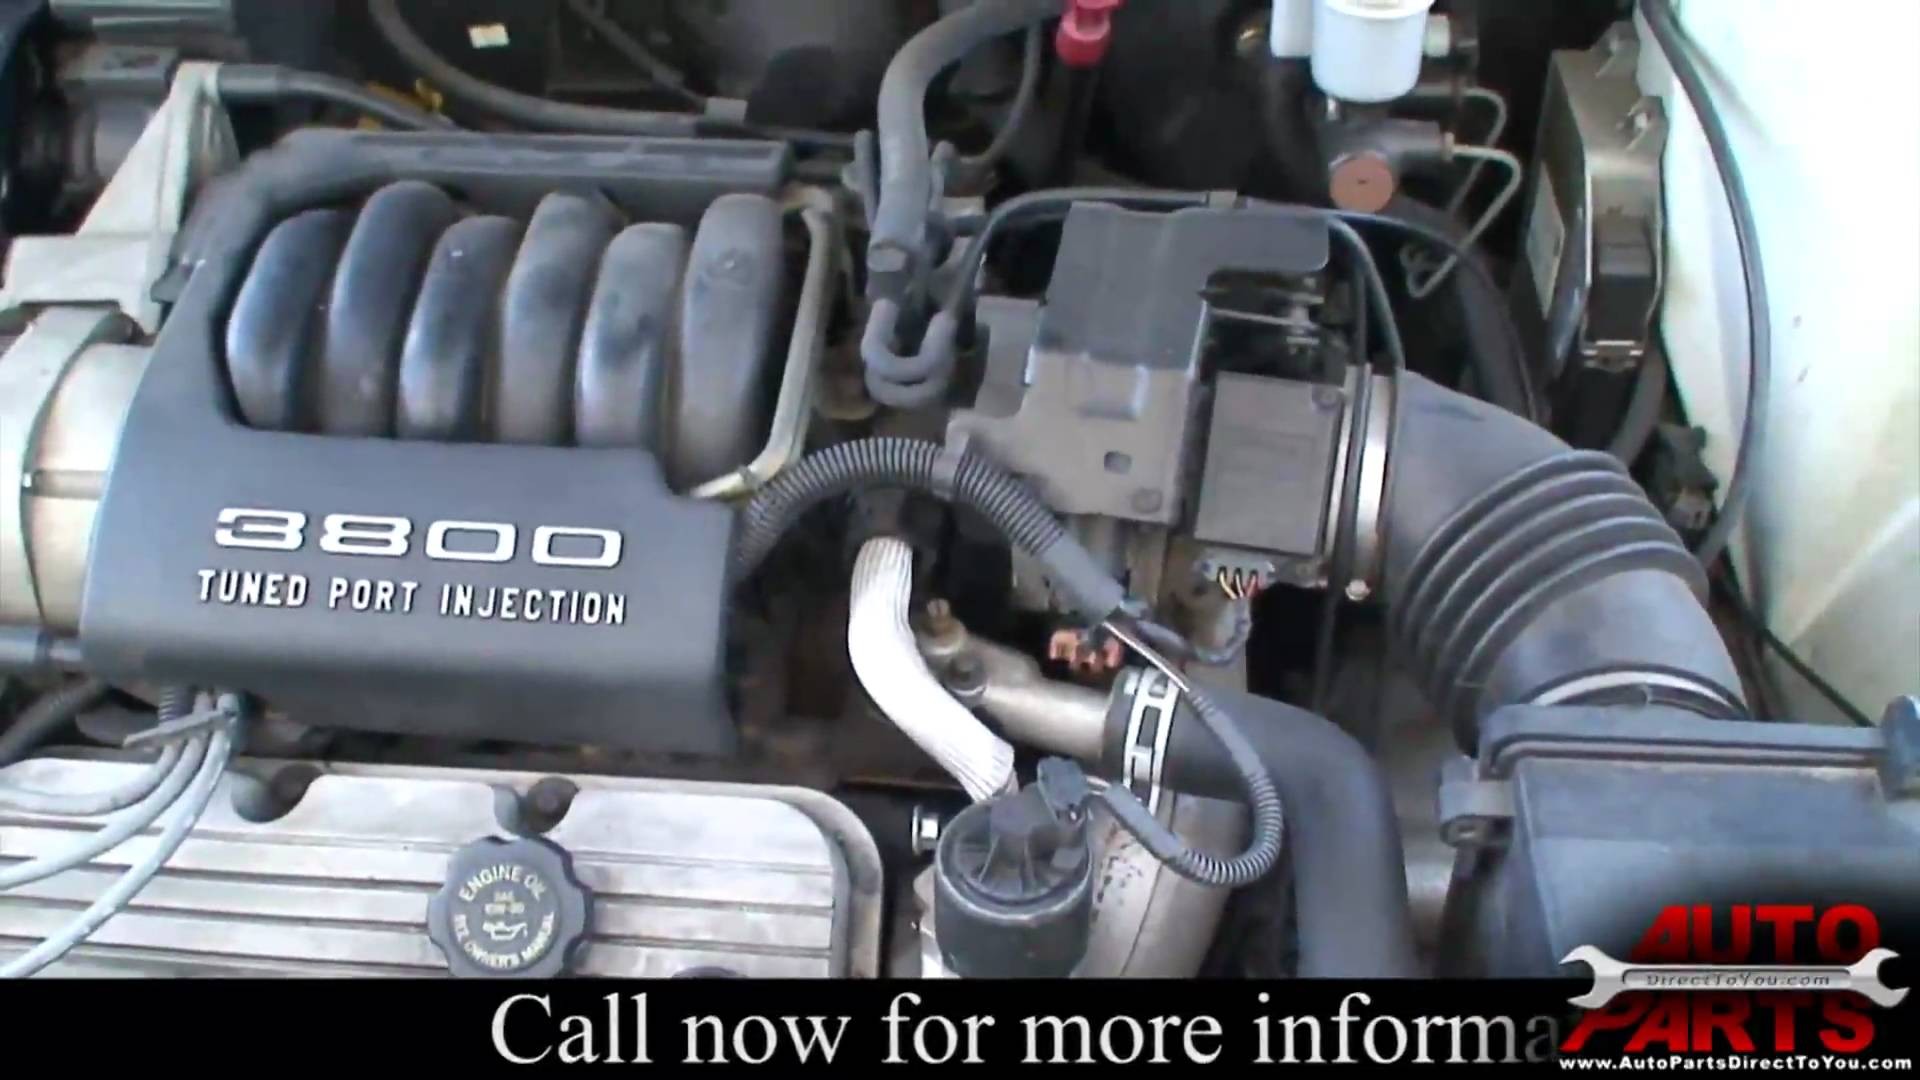 Gm 3800 V6 Engine Diagram 1995 Buick Lesabre Intake Manifold Part 1 Intro Of Gm 3800 V6 Engine Diagram